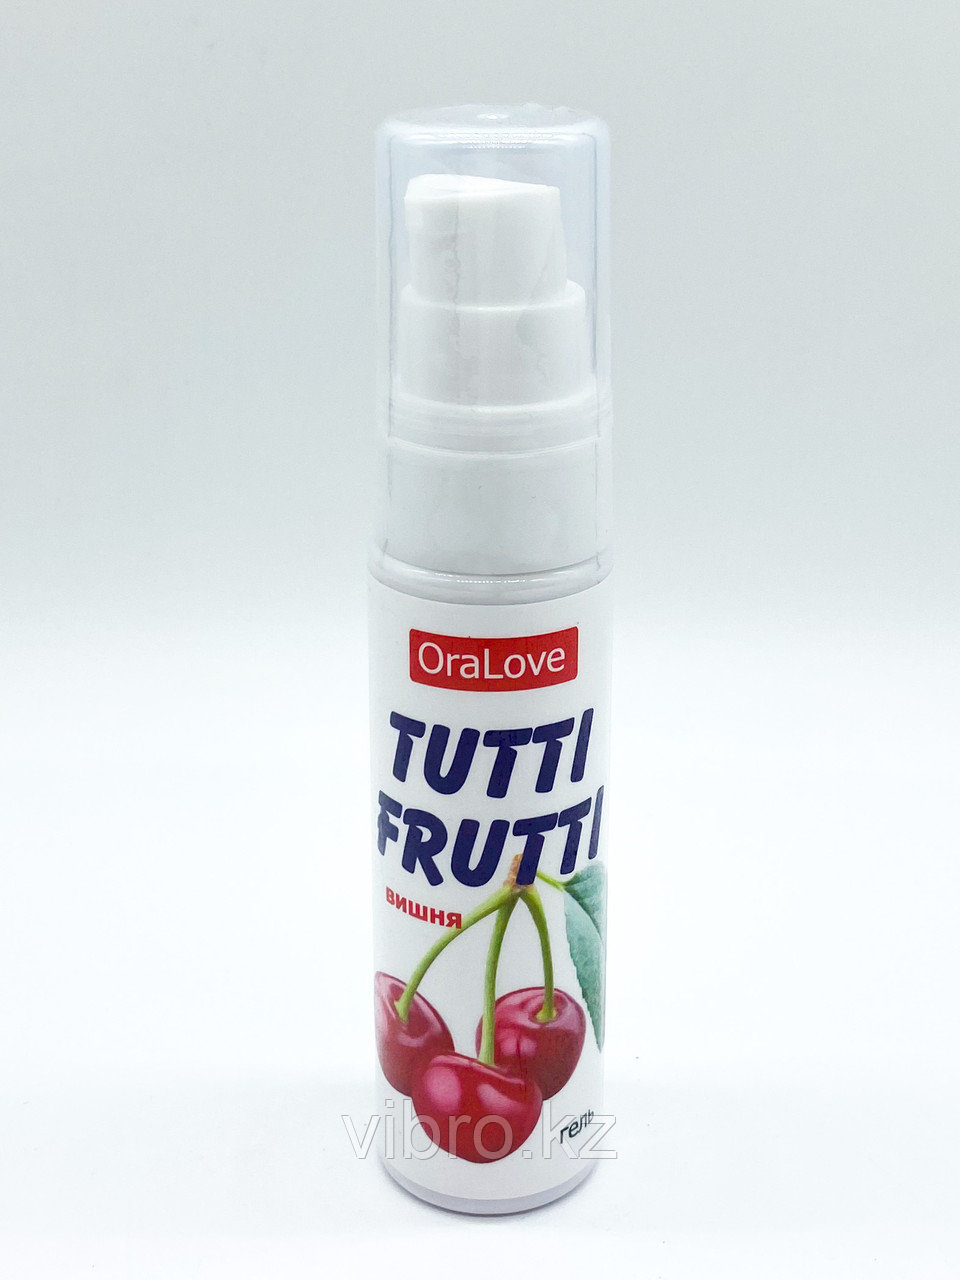 Съедобный лубрикант Tutti Frutti со вкусом вишни. 30мл